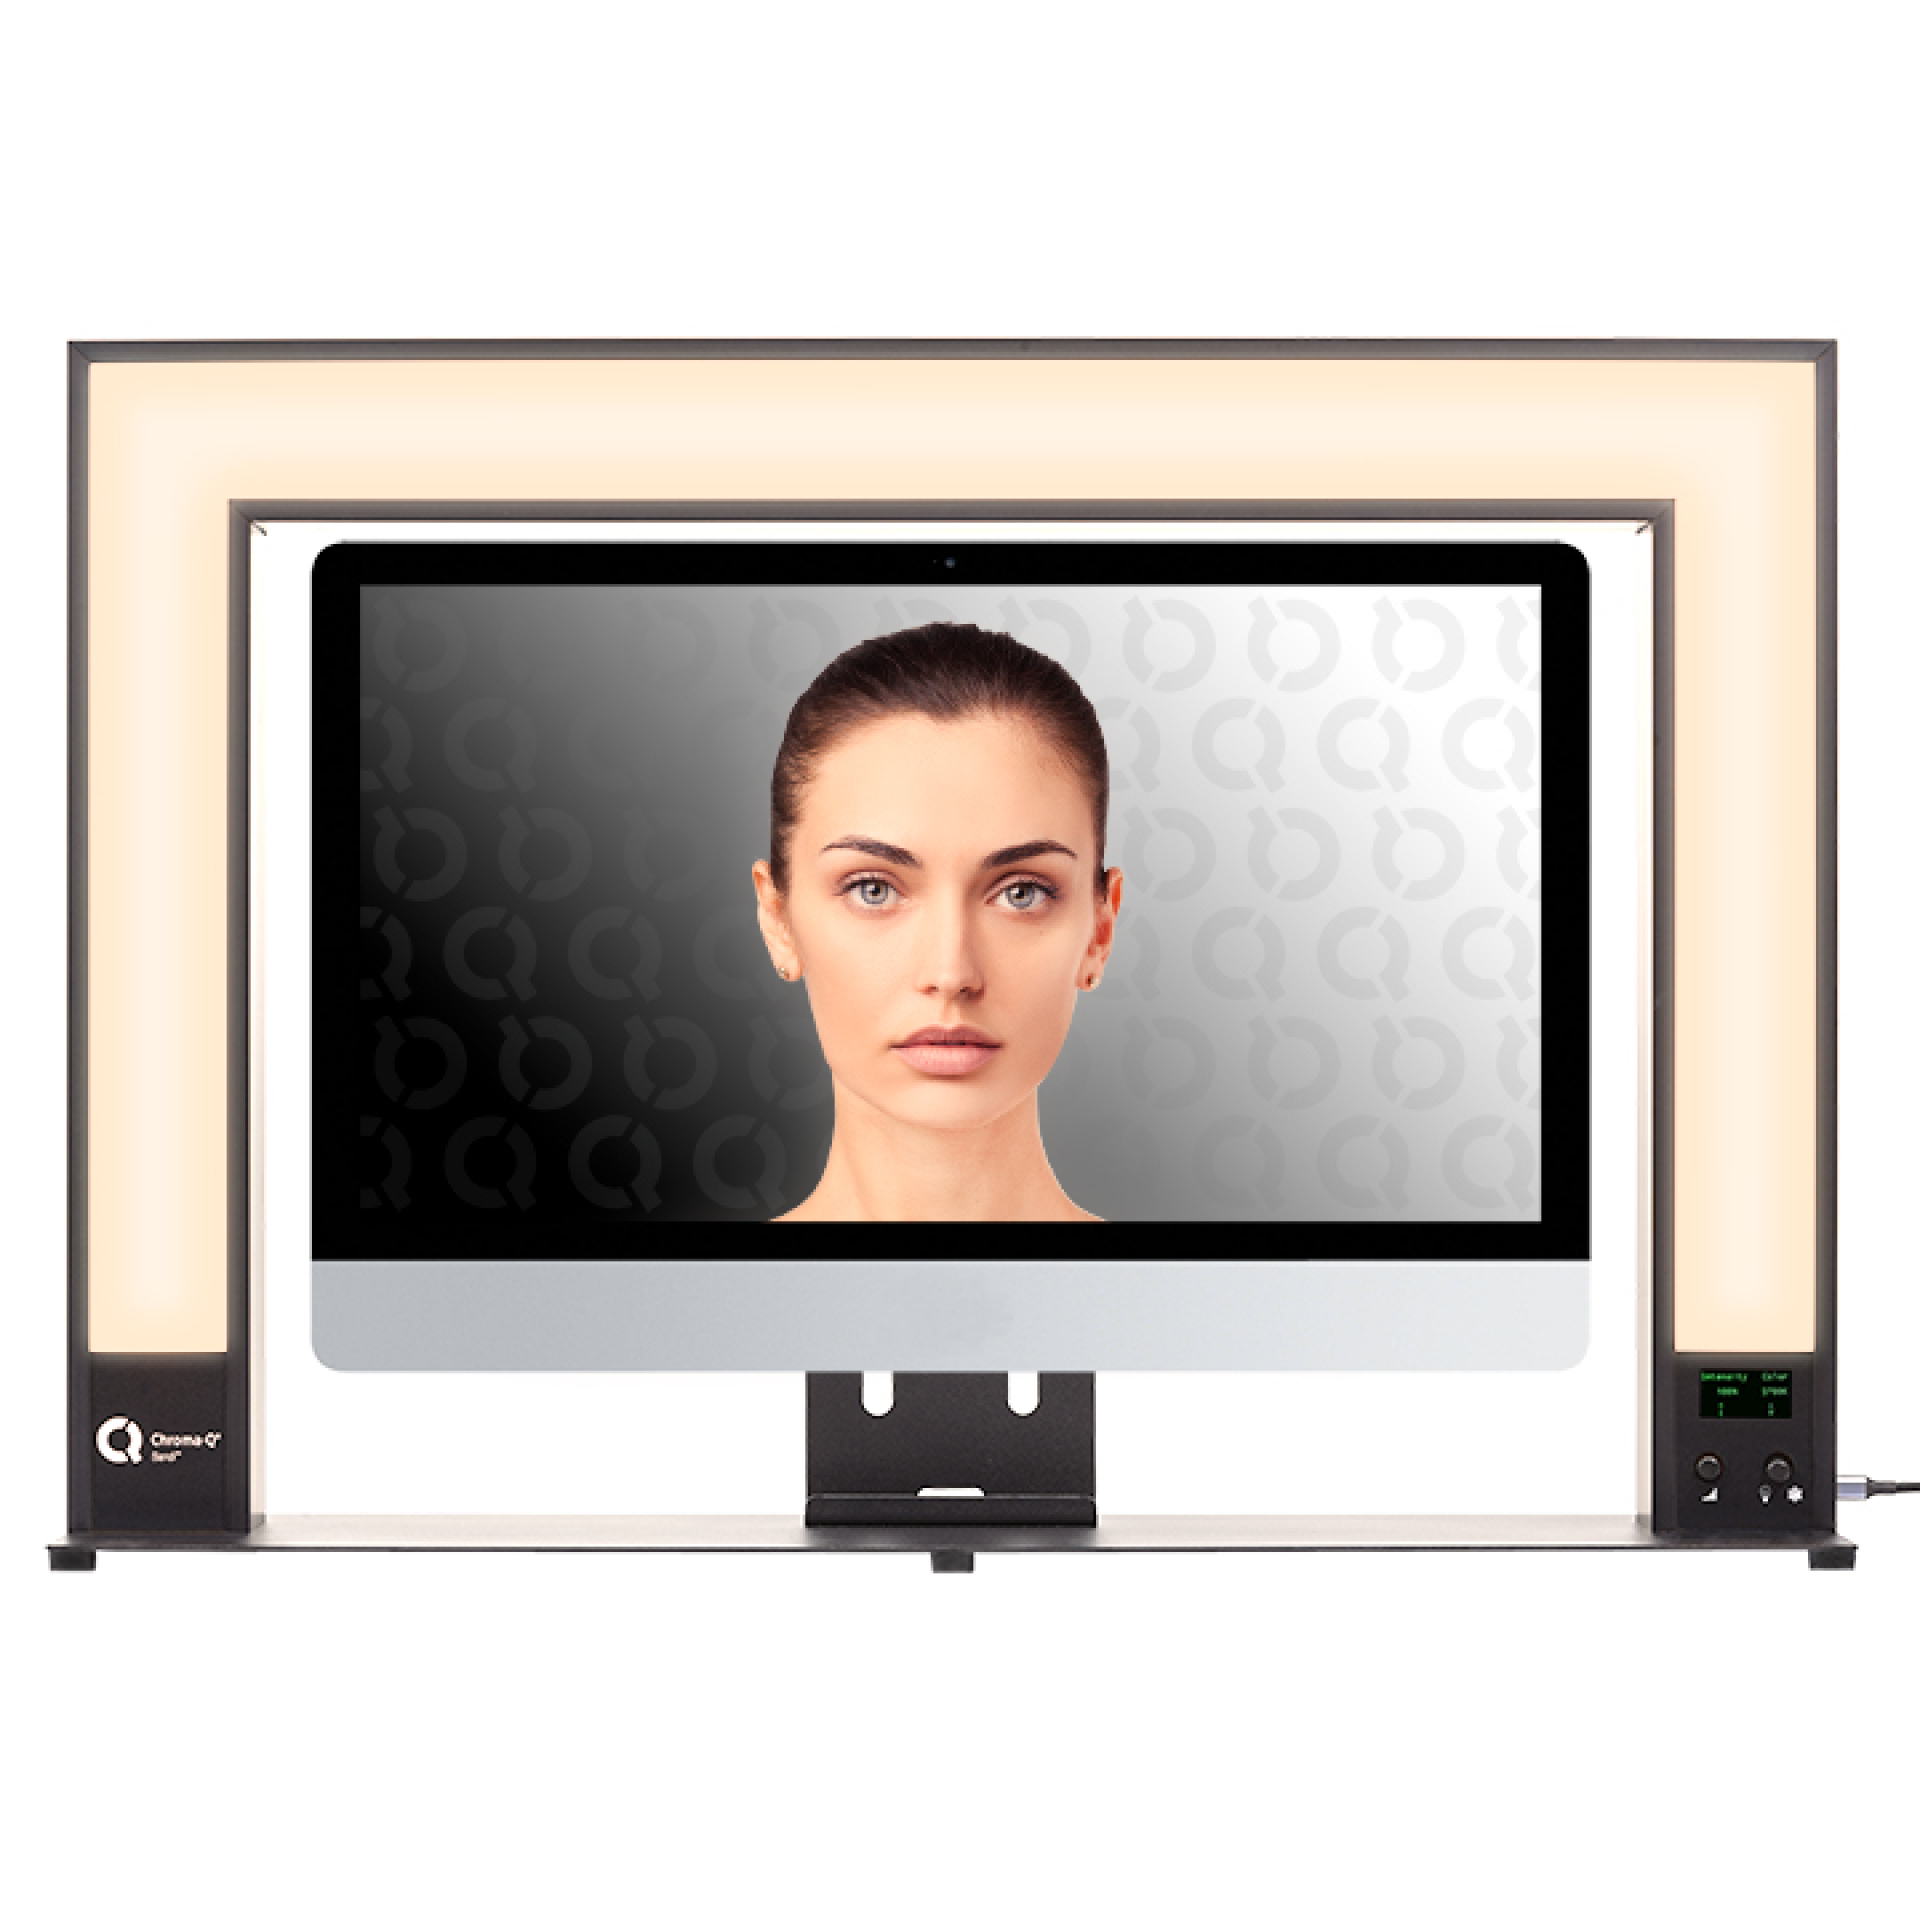 Chroma-Q Sandi - Warm white light with monitor